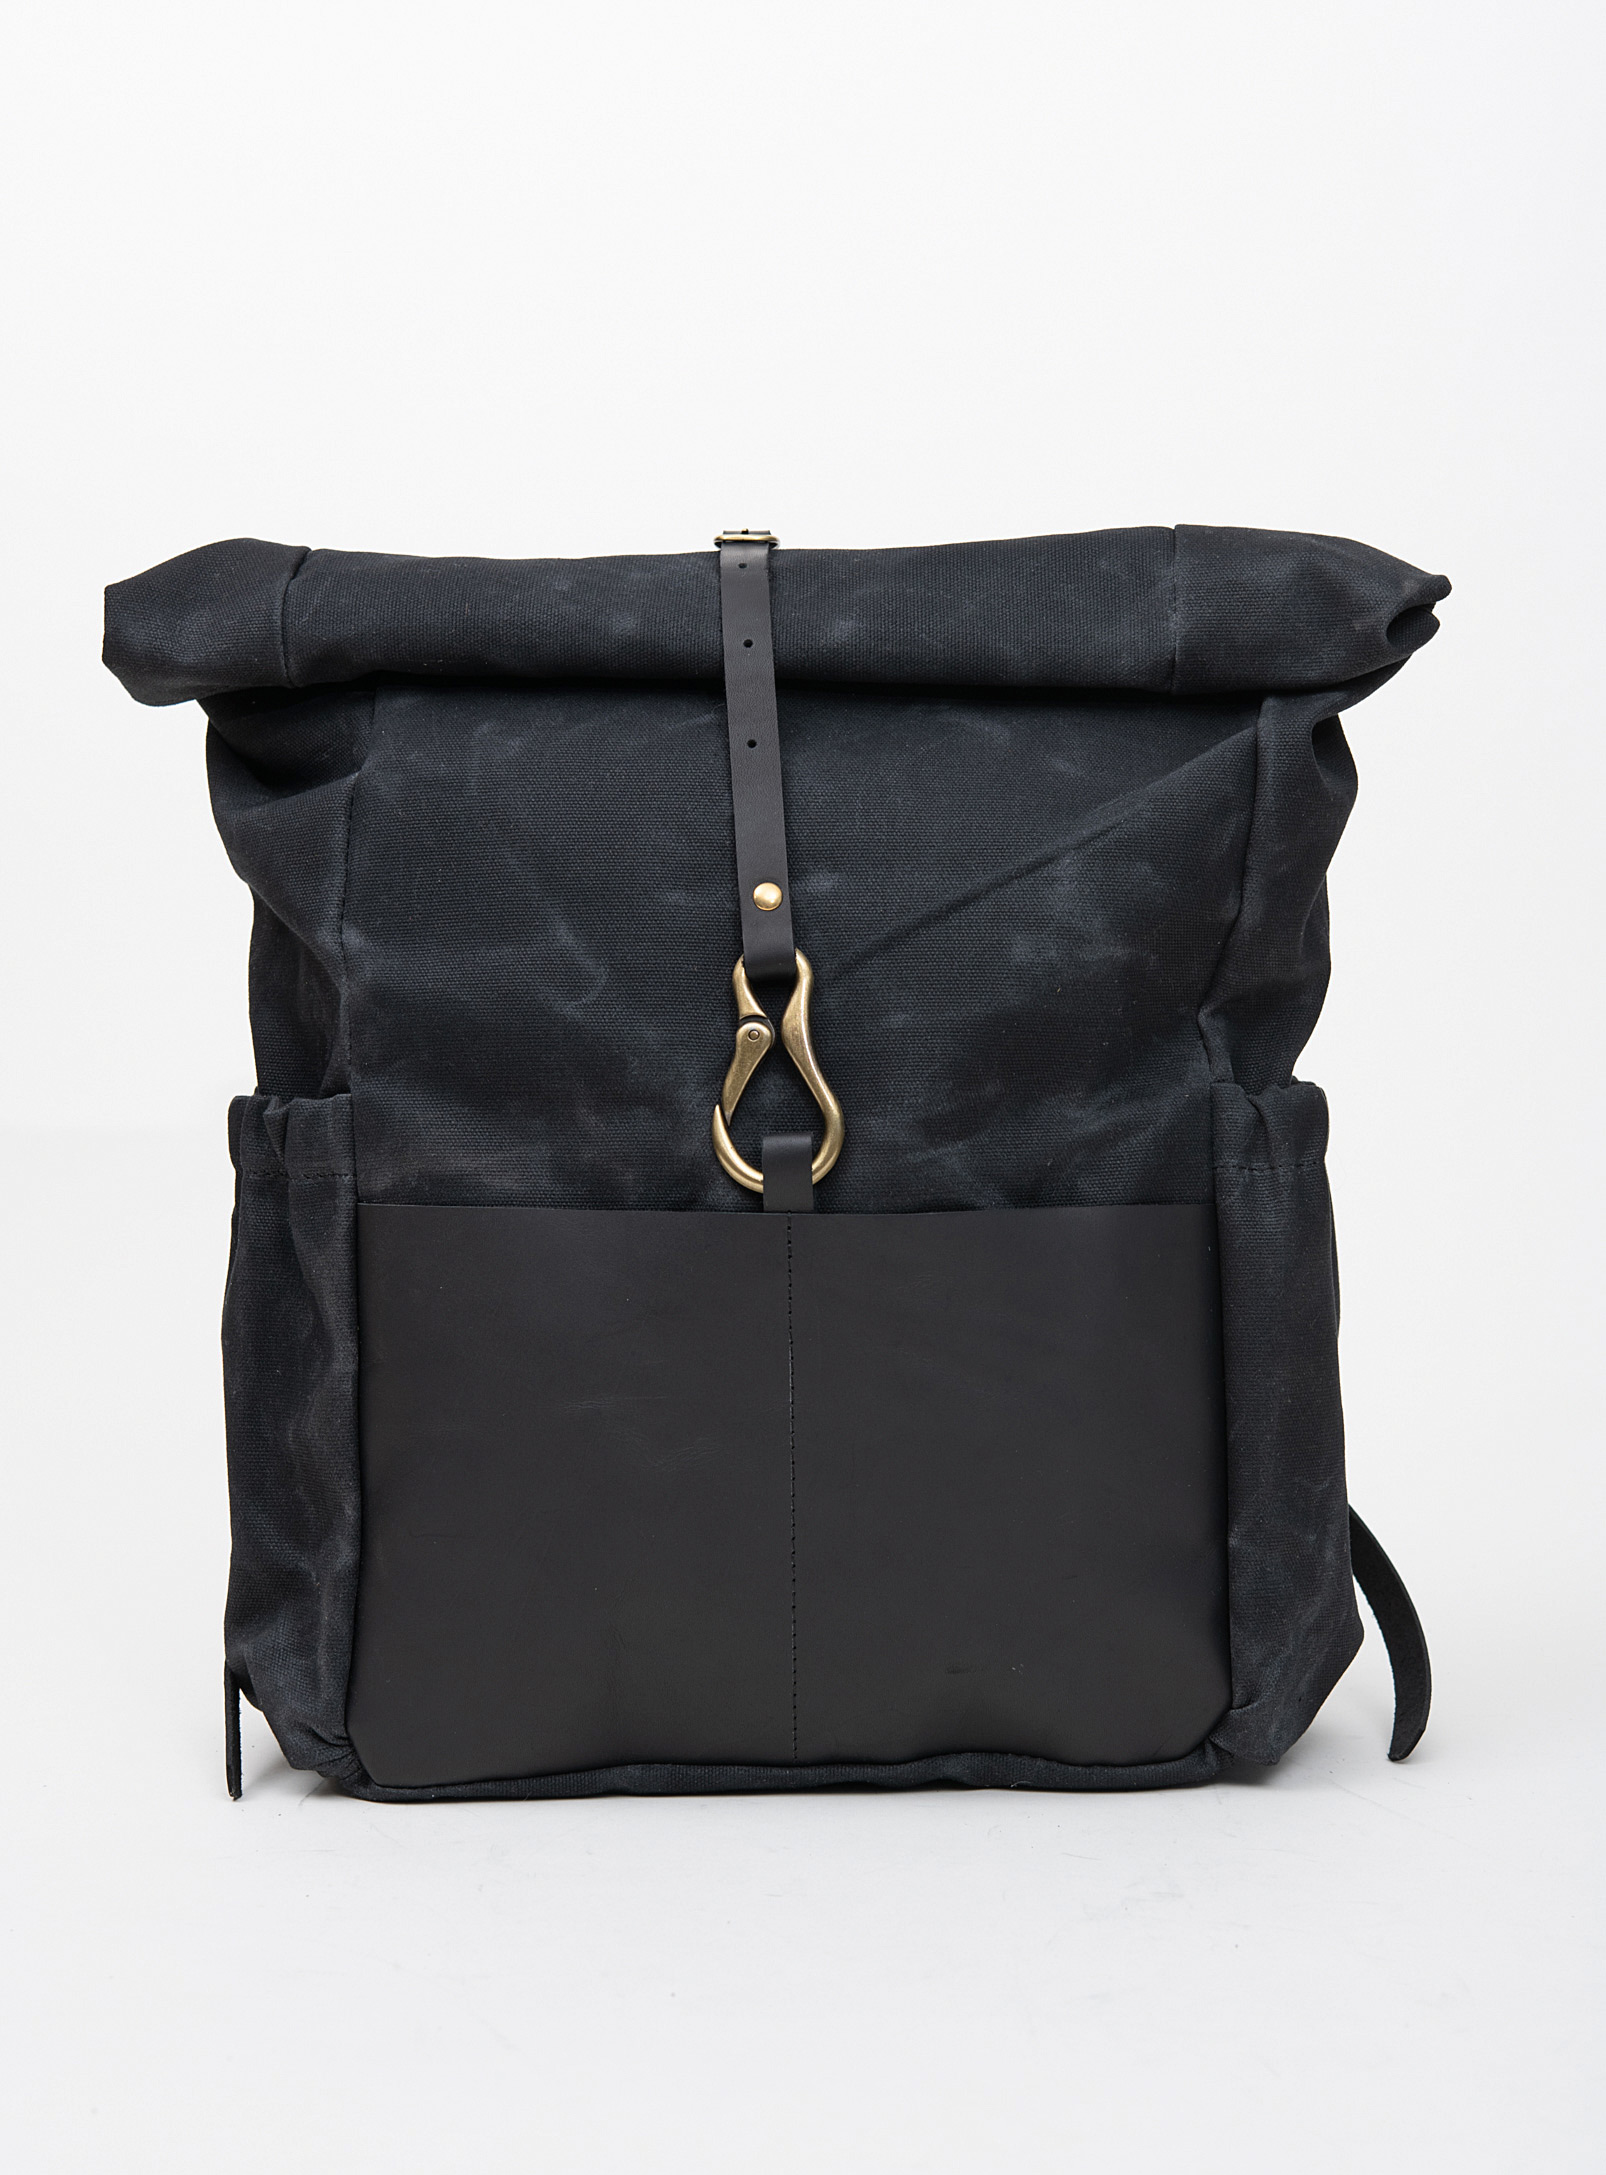 Veinage De Lorimier Backpack In Black